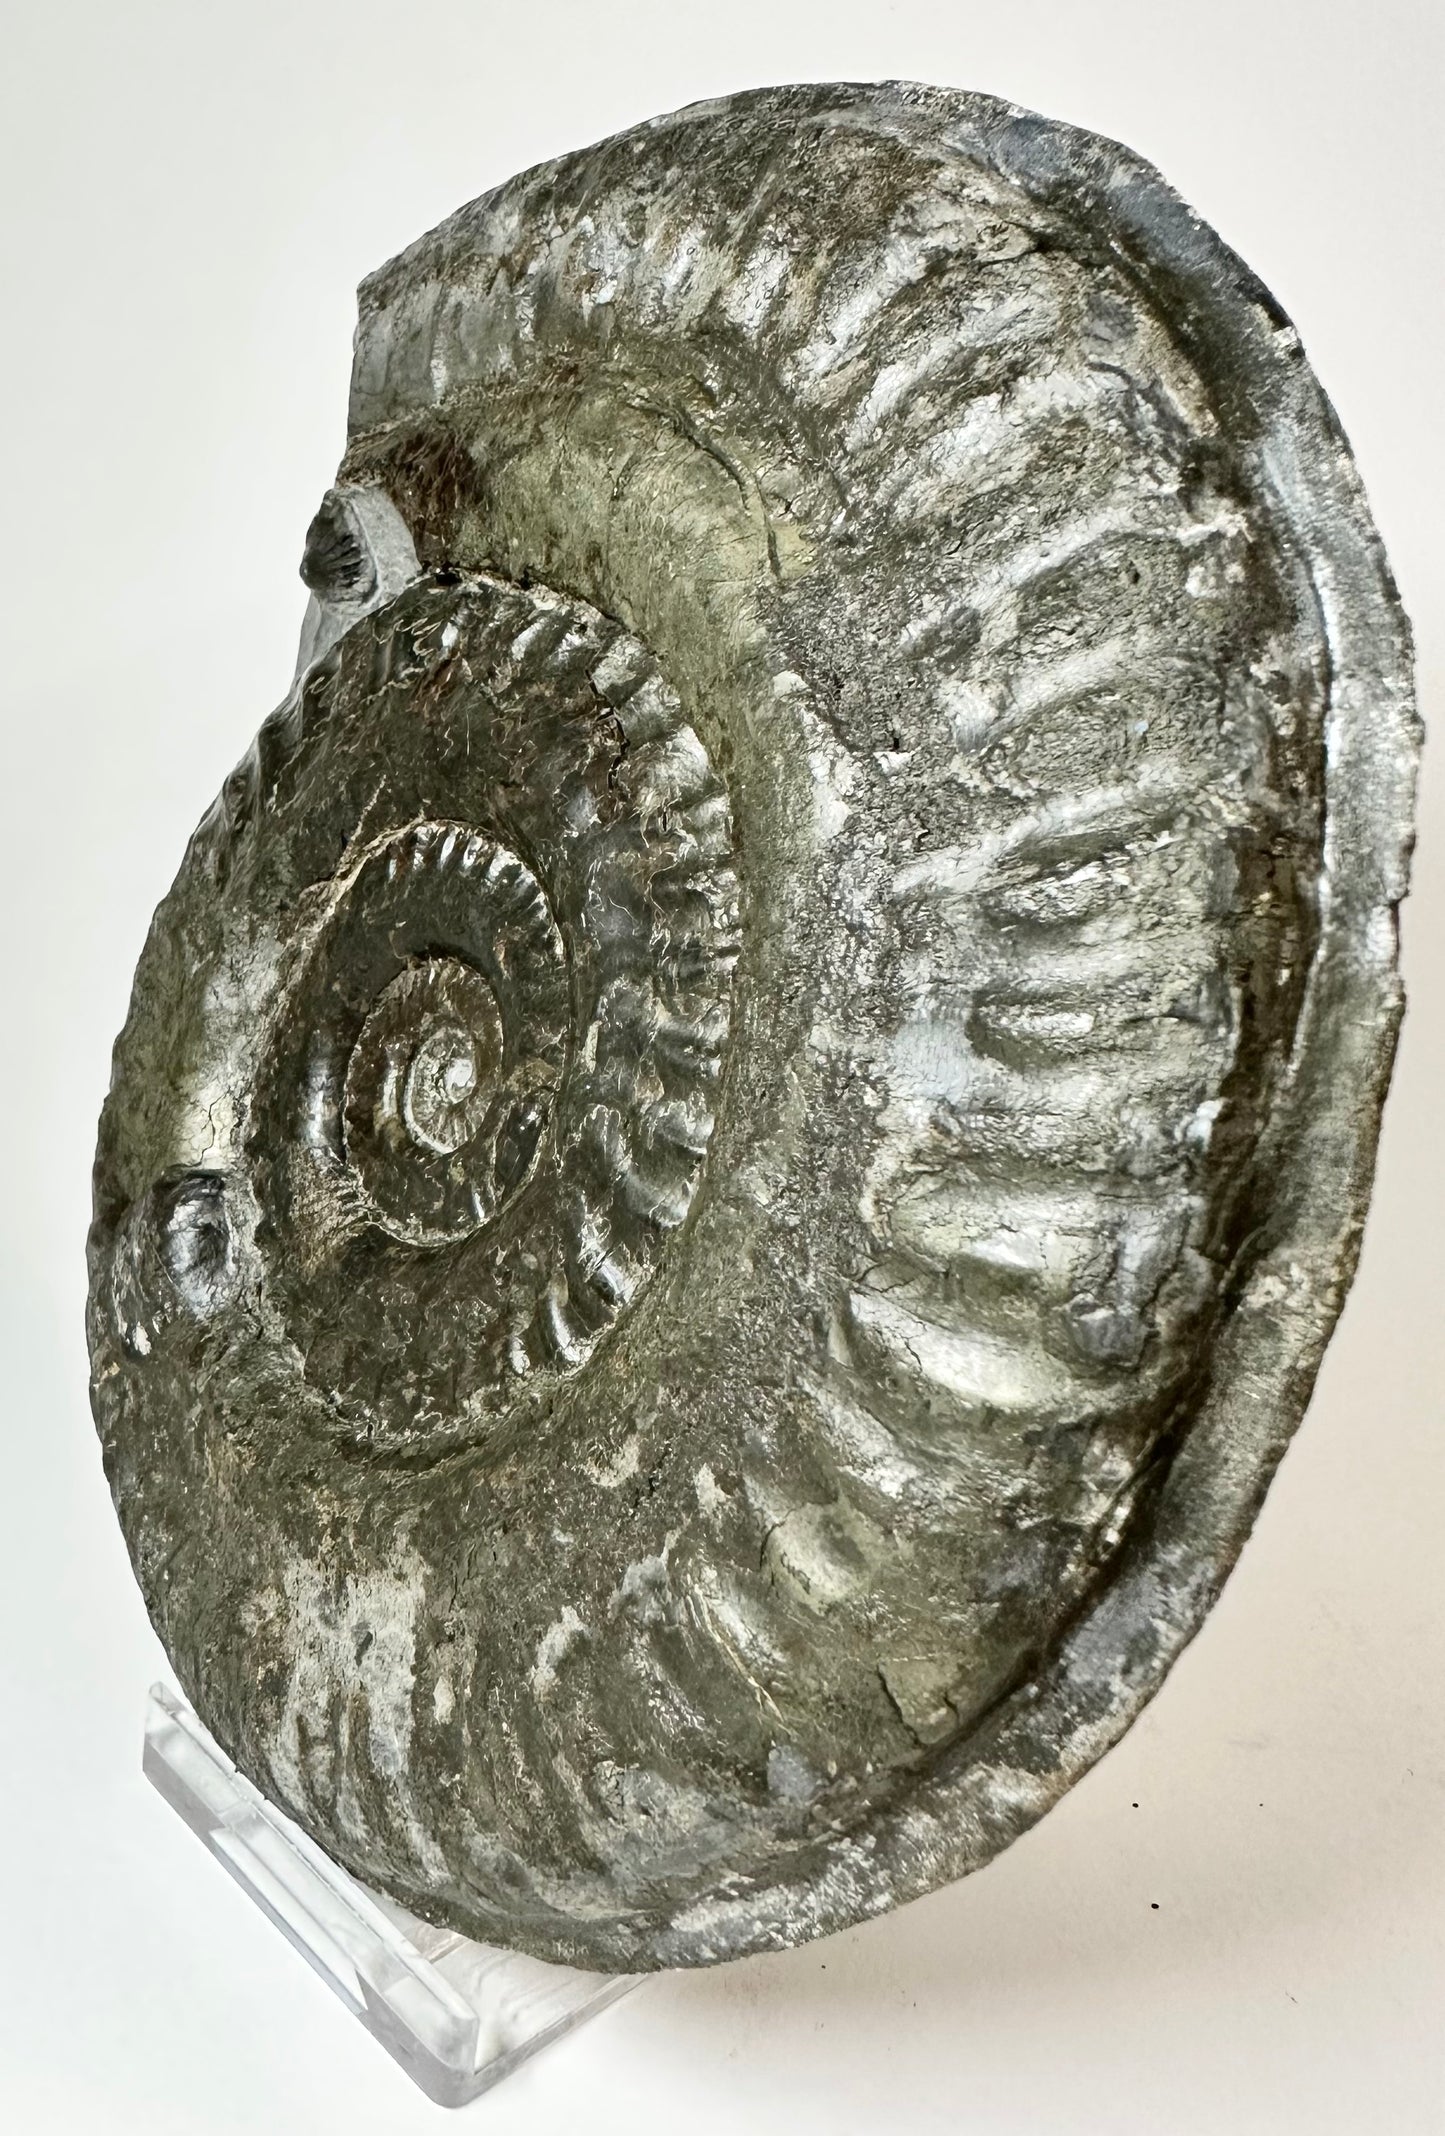 Hildoceras Lustanicum Ammonite, Jurassic coast, North Yorkshire, Whitby.